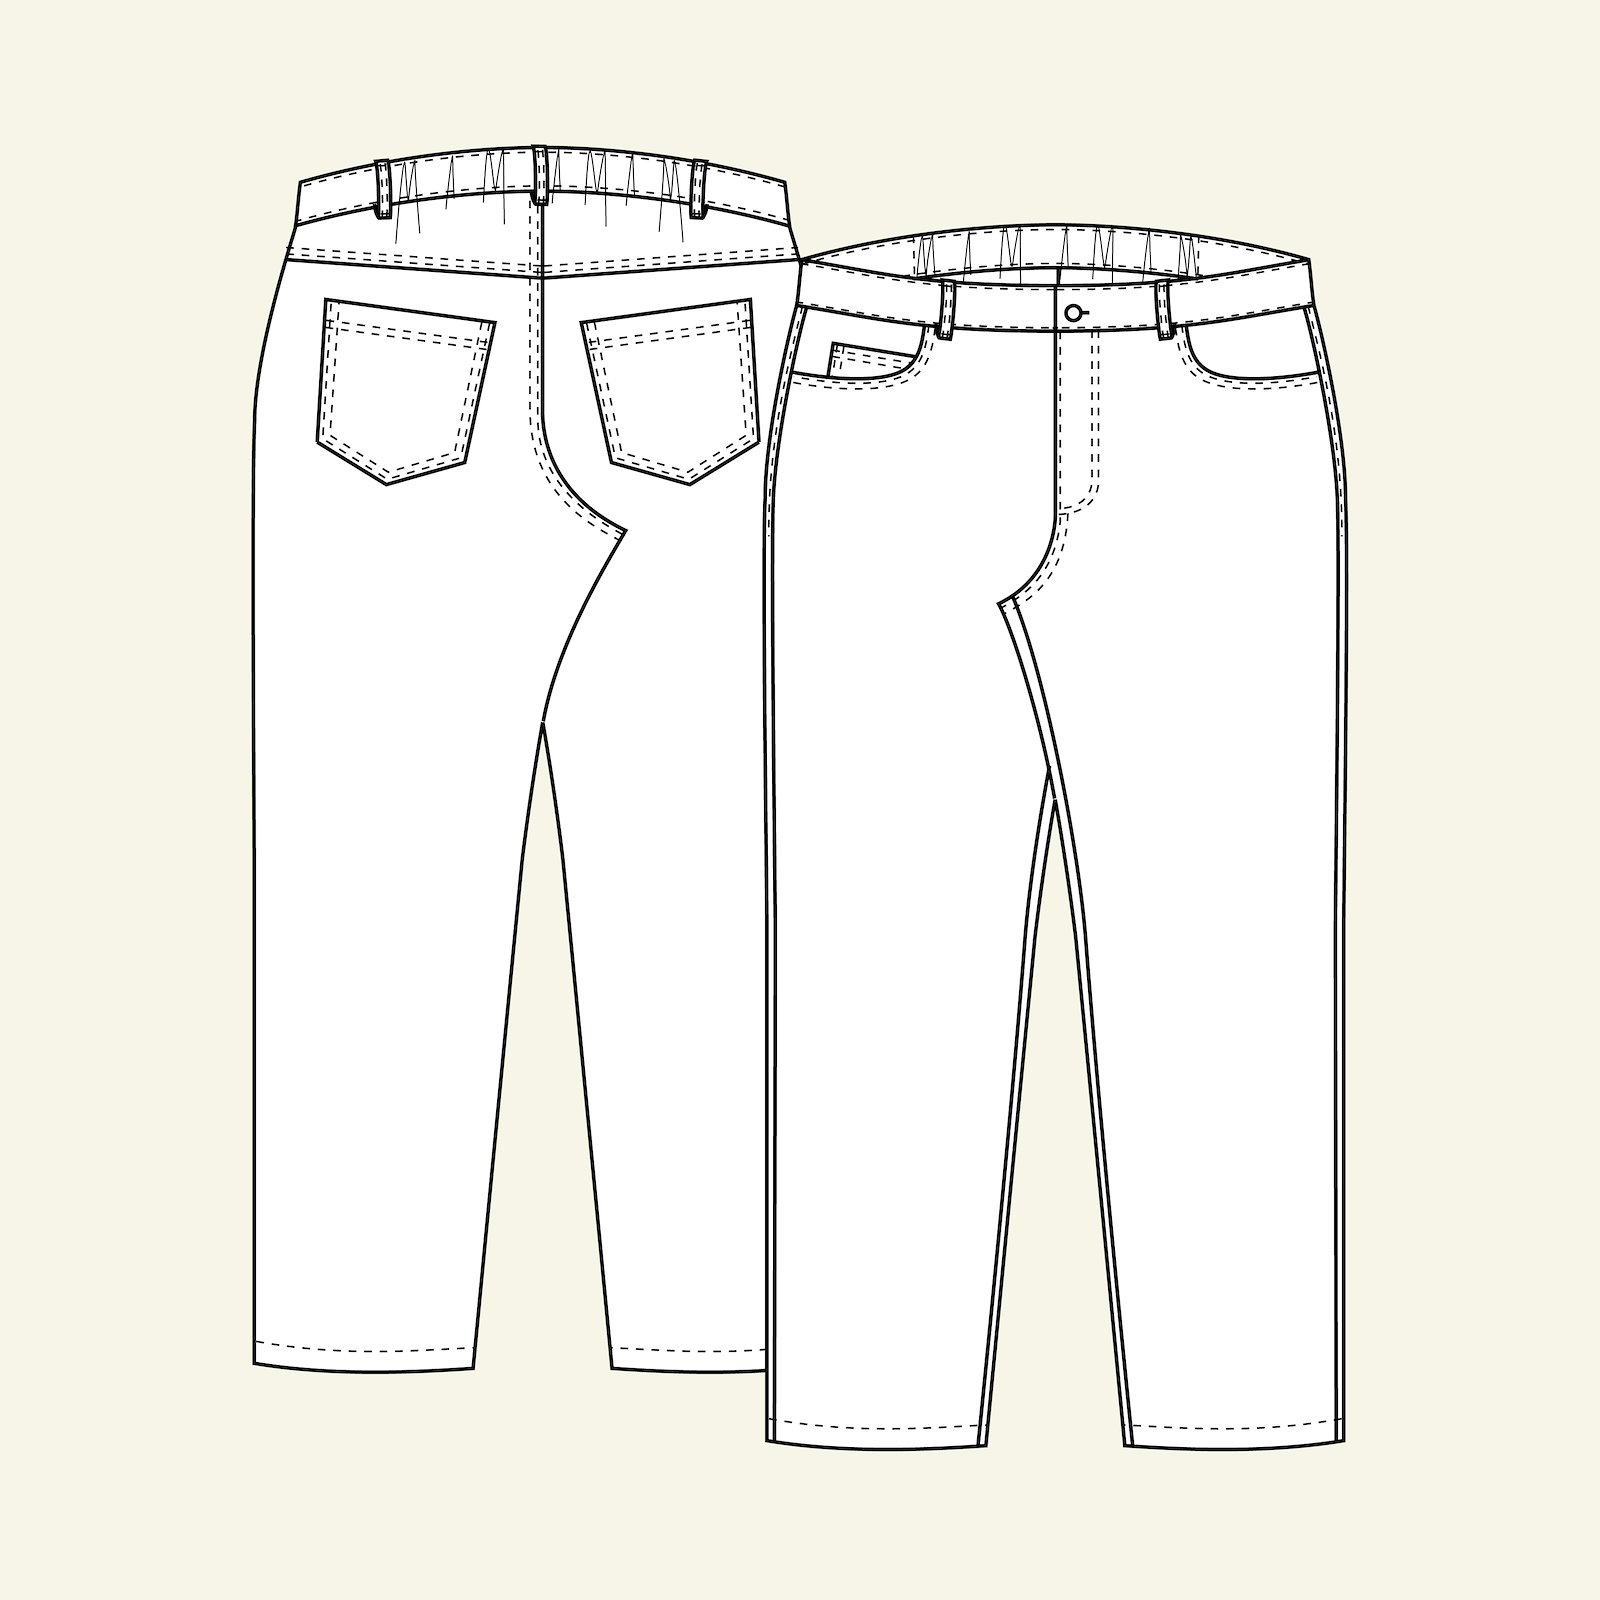 Klassisk jeans med resårlinning bak, 58 p70007000_p70007001_p70007002_p70007003_p70007004_pack_b